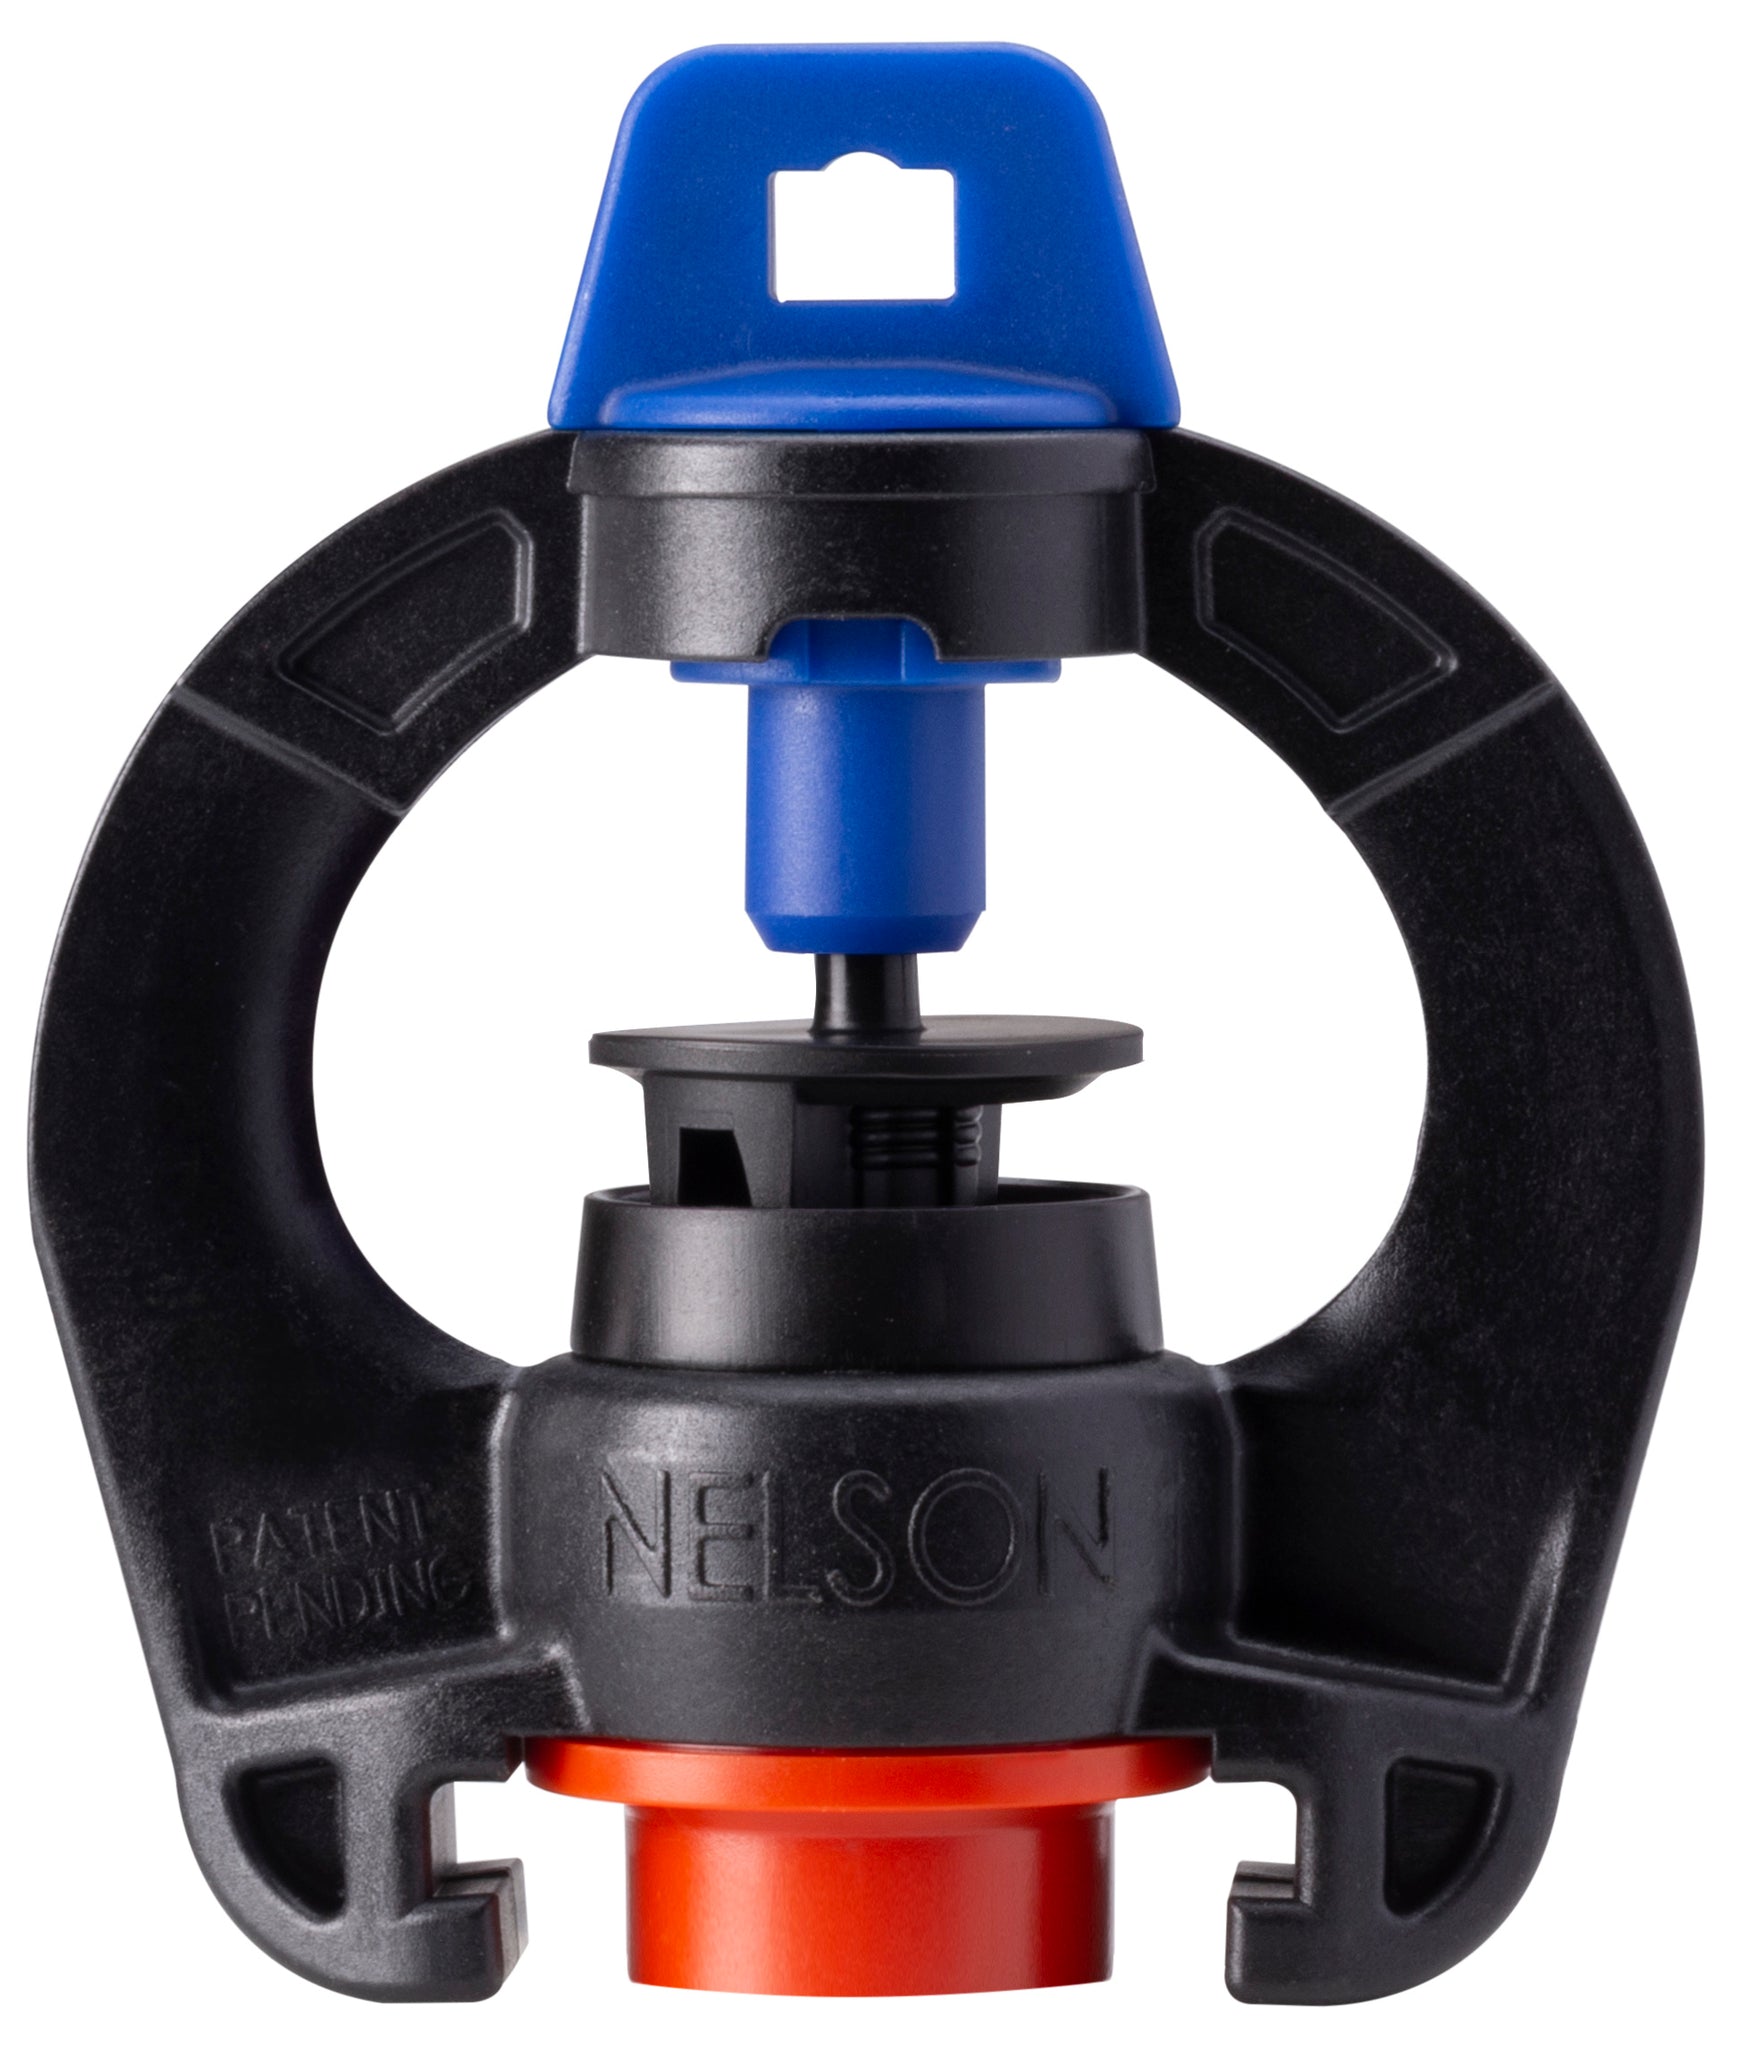 Vyrsa Impact Sprinkler VYR-65 25mm W/6.4mm 3.2R Nozzle